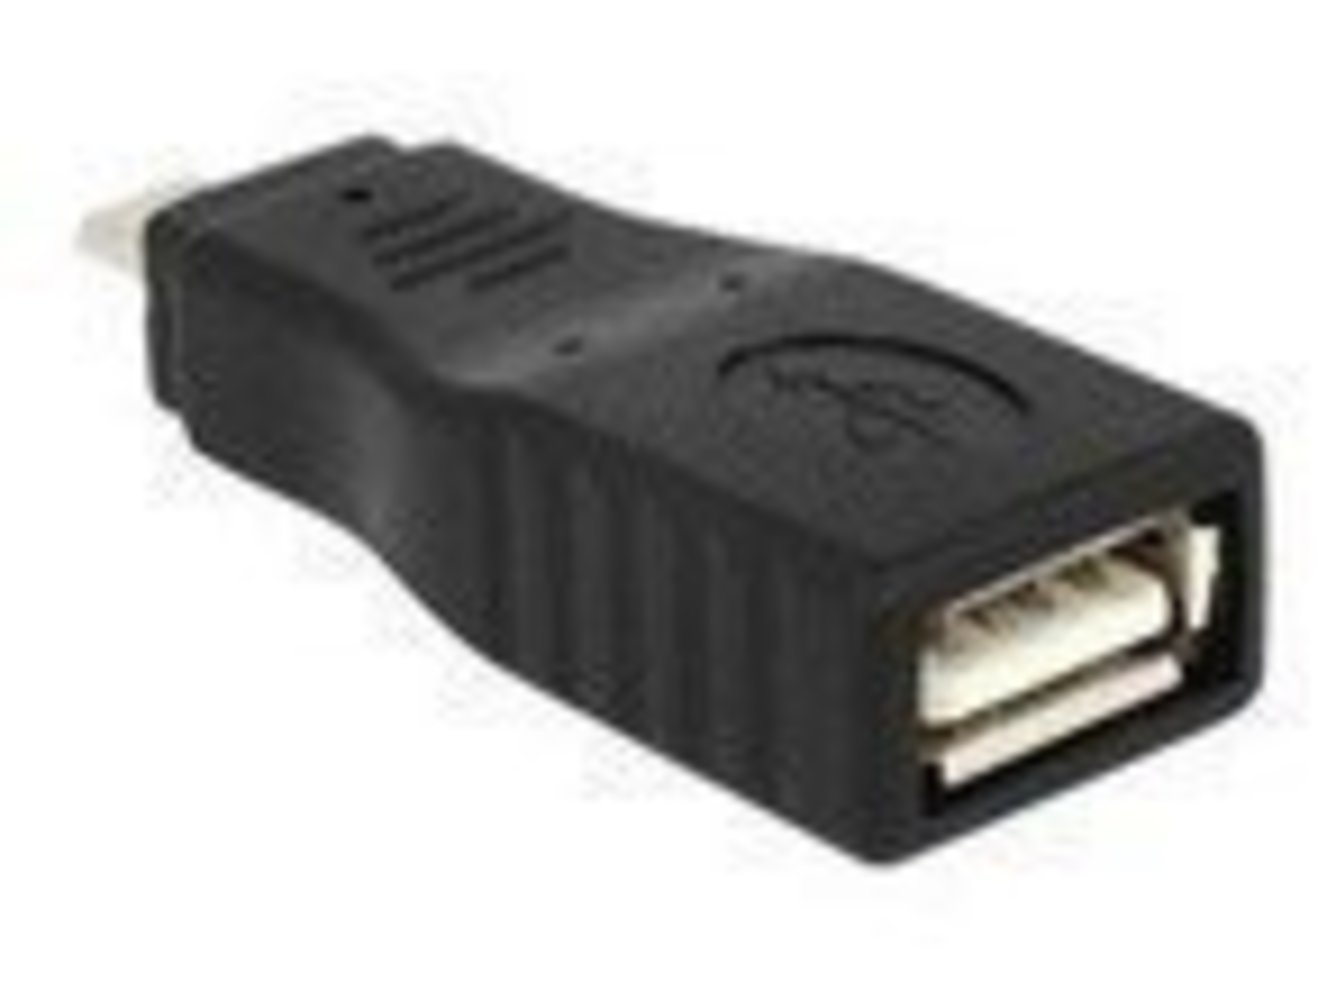 DELOCK Adapter USB micro-B St/ USB A Bu full covered OTG - schnell & zuverlässig